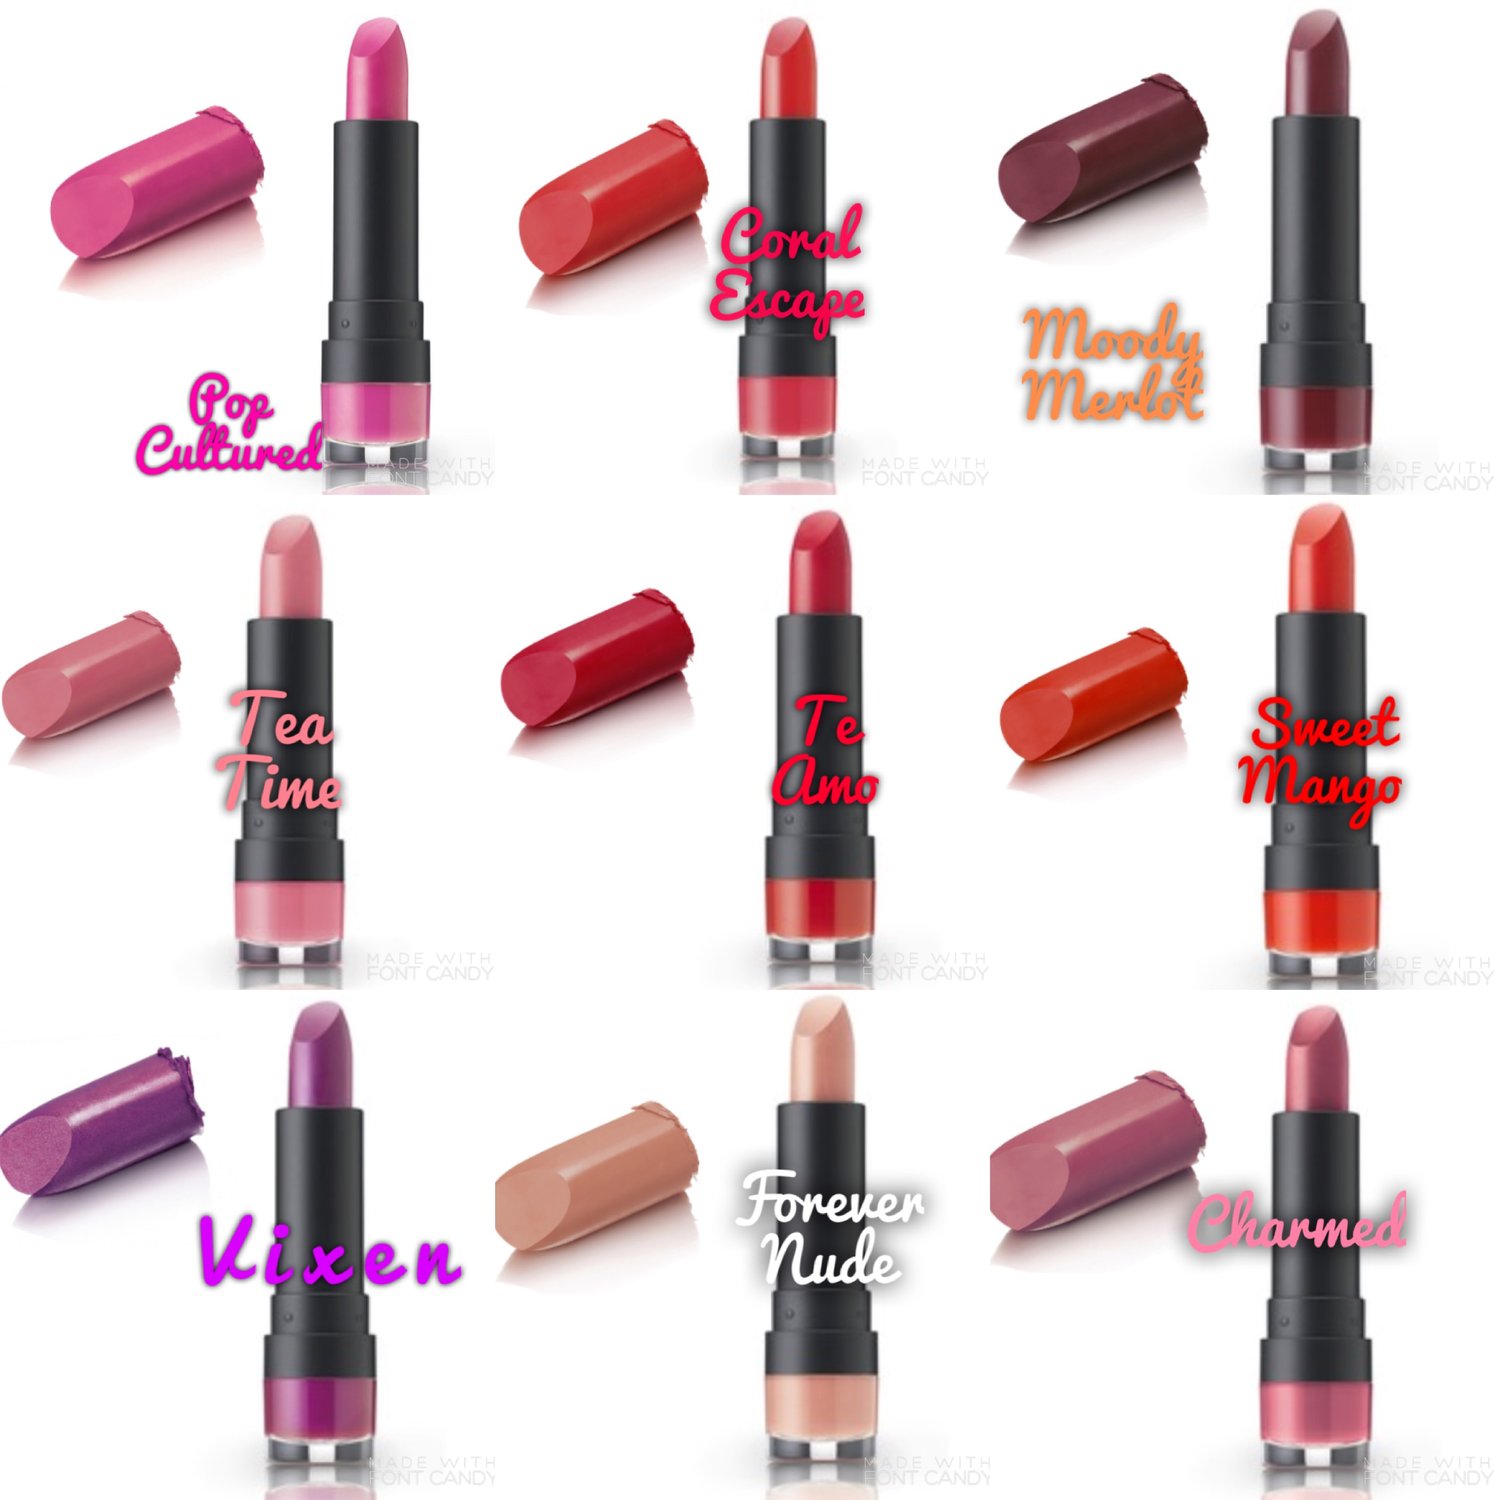 Glam Lyfe Cosmetics Bh Creme Lux Lipsticks